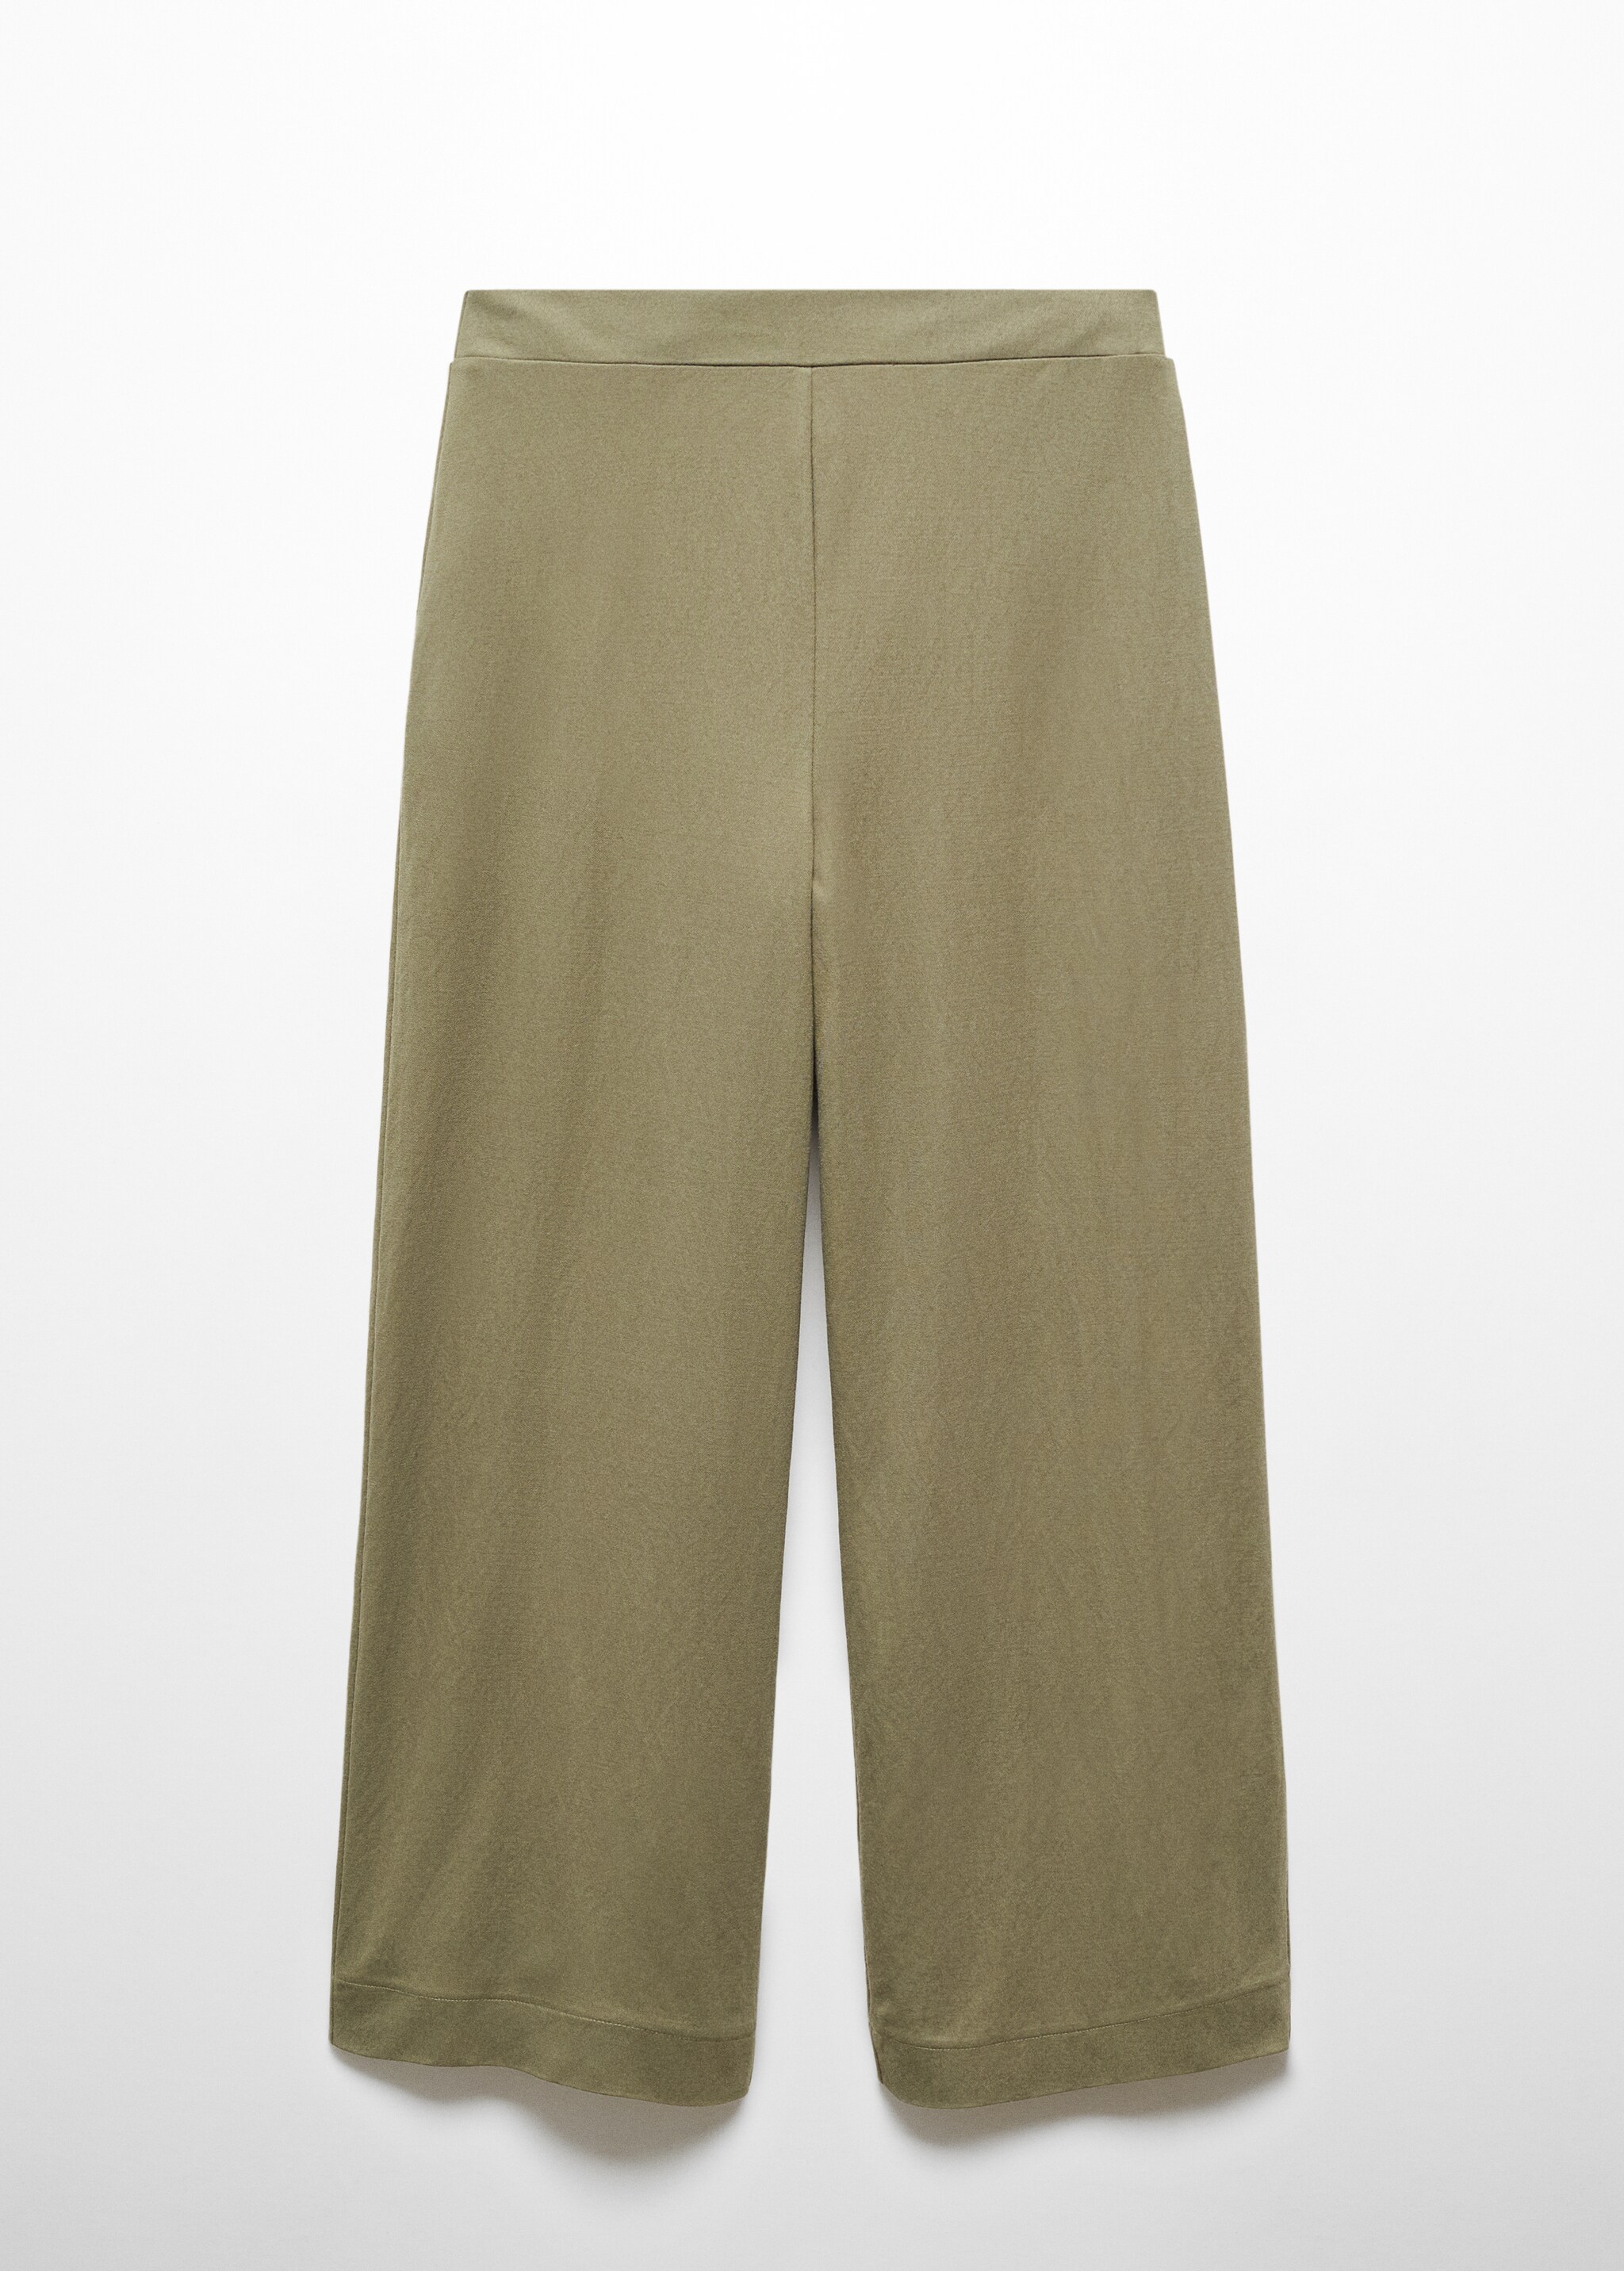 Beli elastik cropped pantolon  - Modelsiz ürün